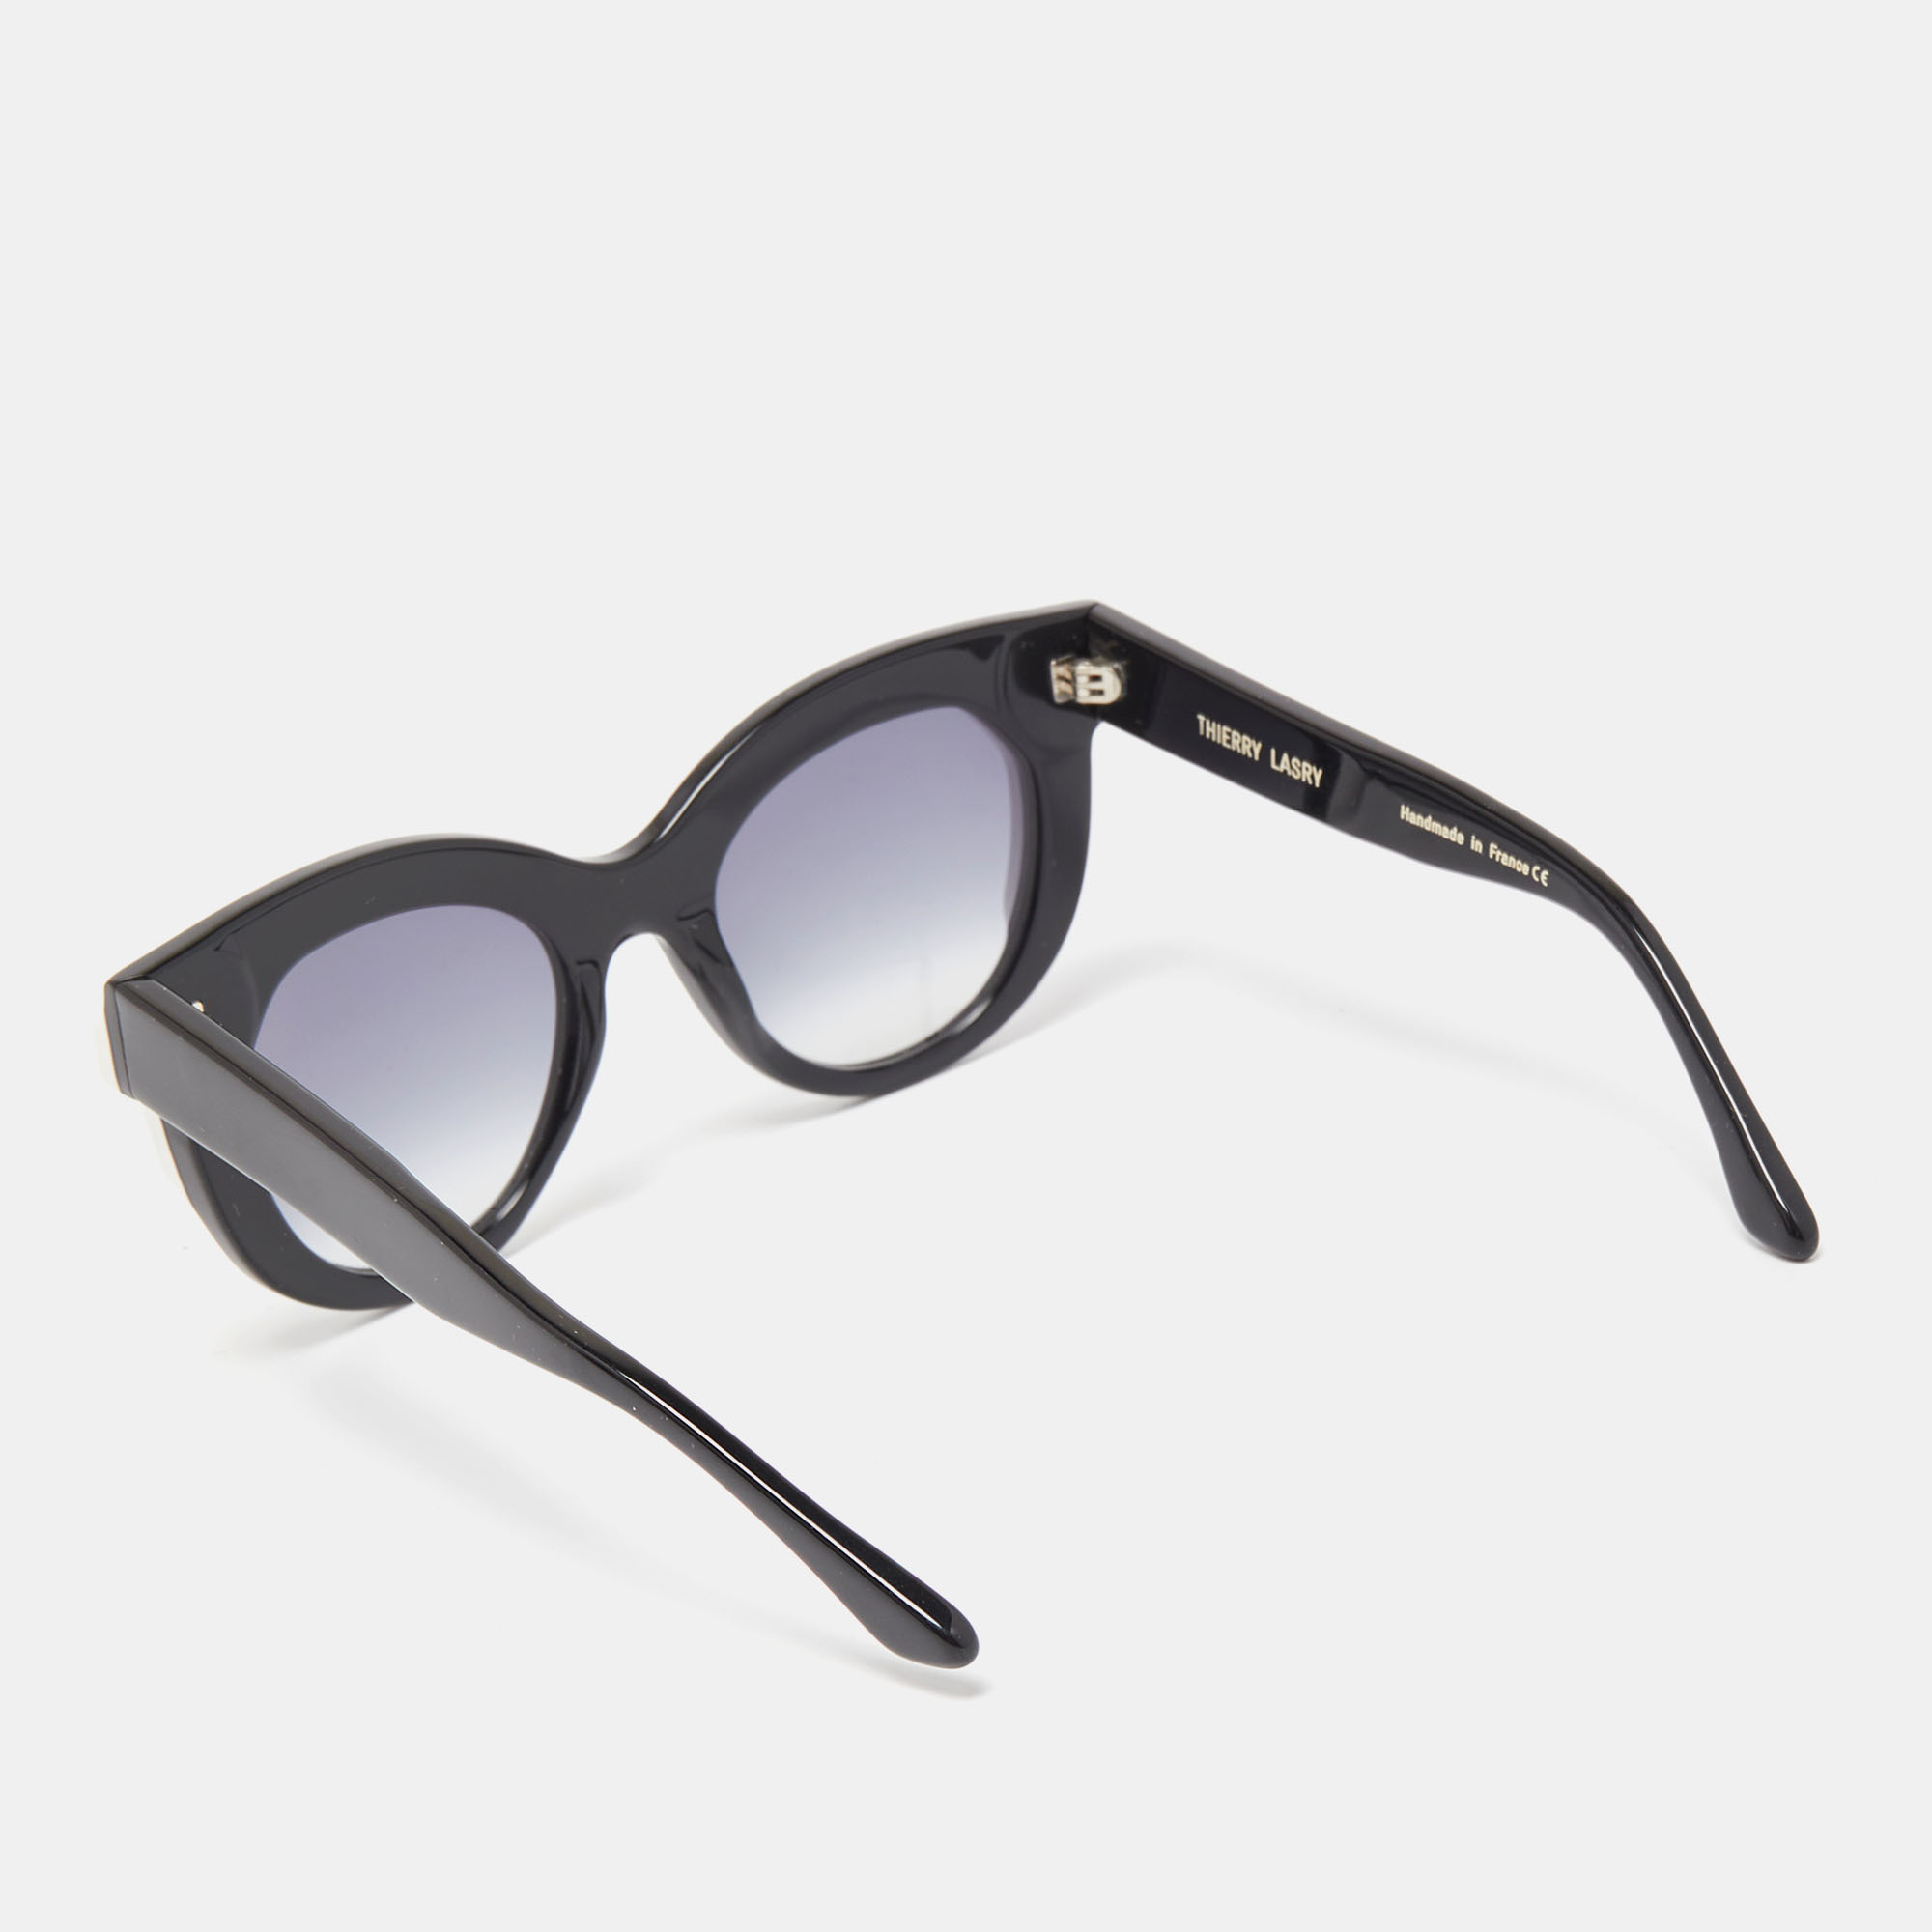 Thierry Lasry Black/White Gradient Slutty 29 Wayfarer Sunglasses